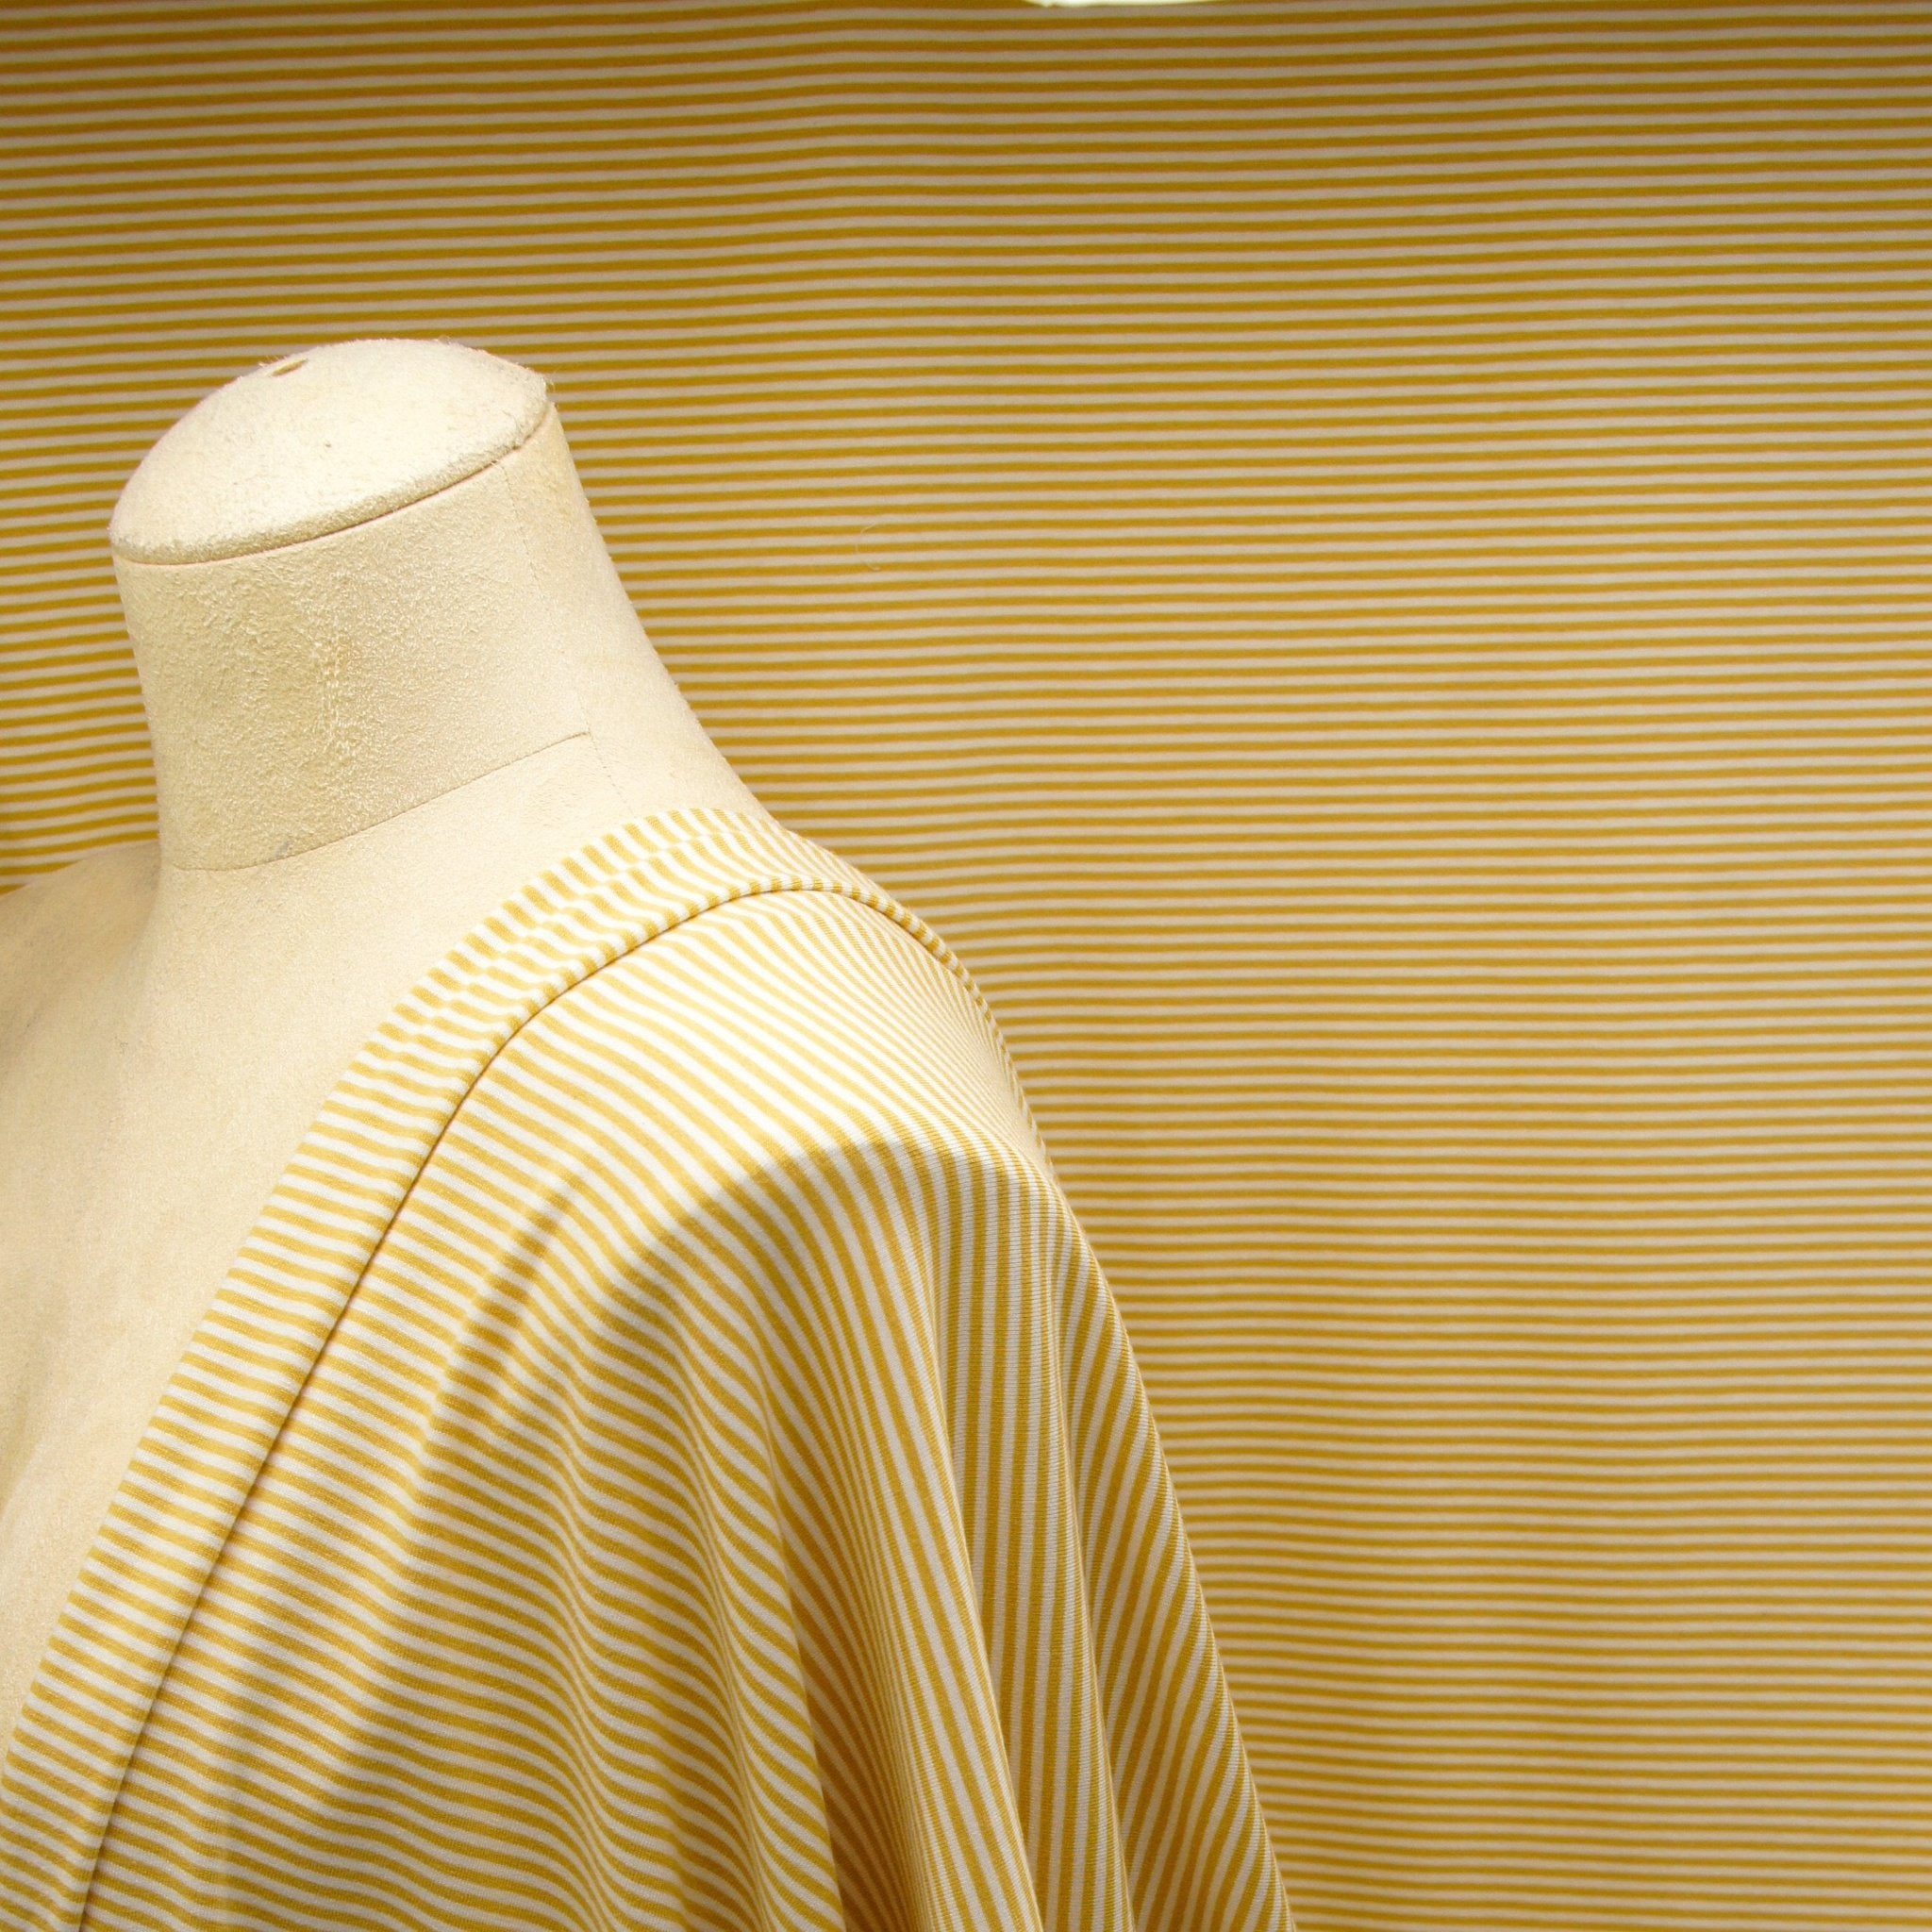 Bamboo Organic Cotton Spandex Jersey - Golden White 2mm Stripes - Knit - Earth Indigo